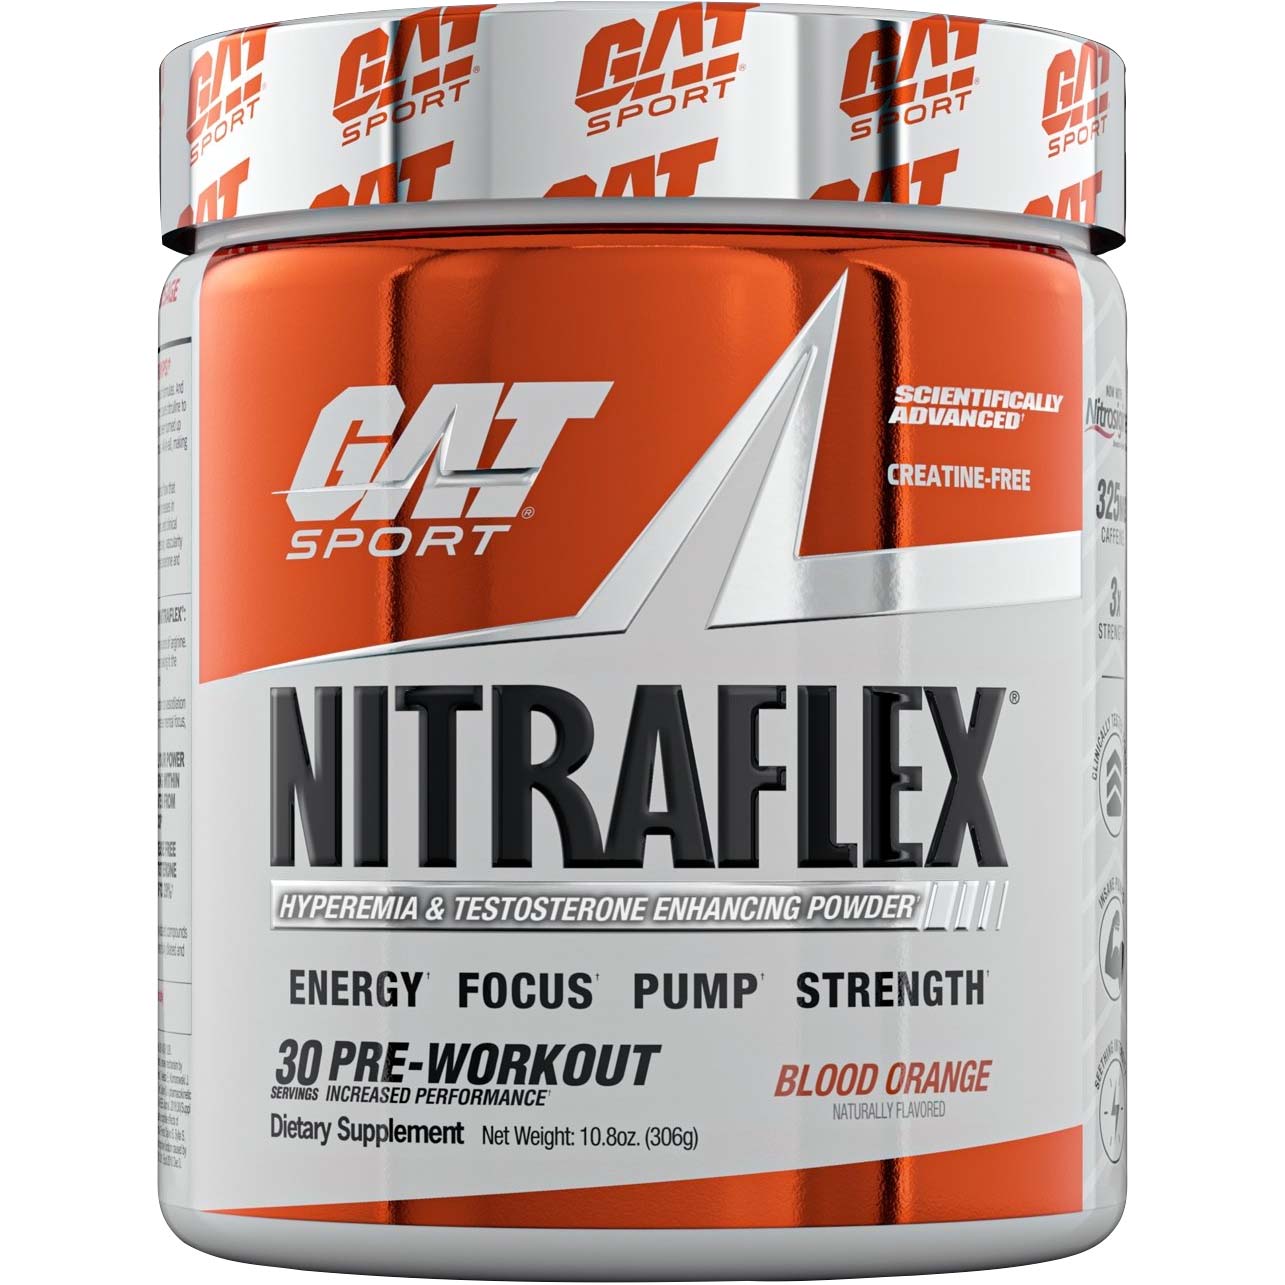 Gat Sport Nitraflex Testosterone Boosting Powder 30 Blood Orange